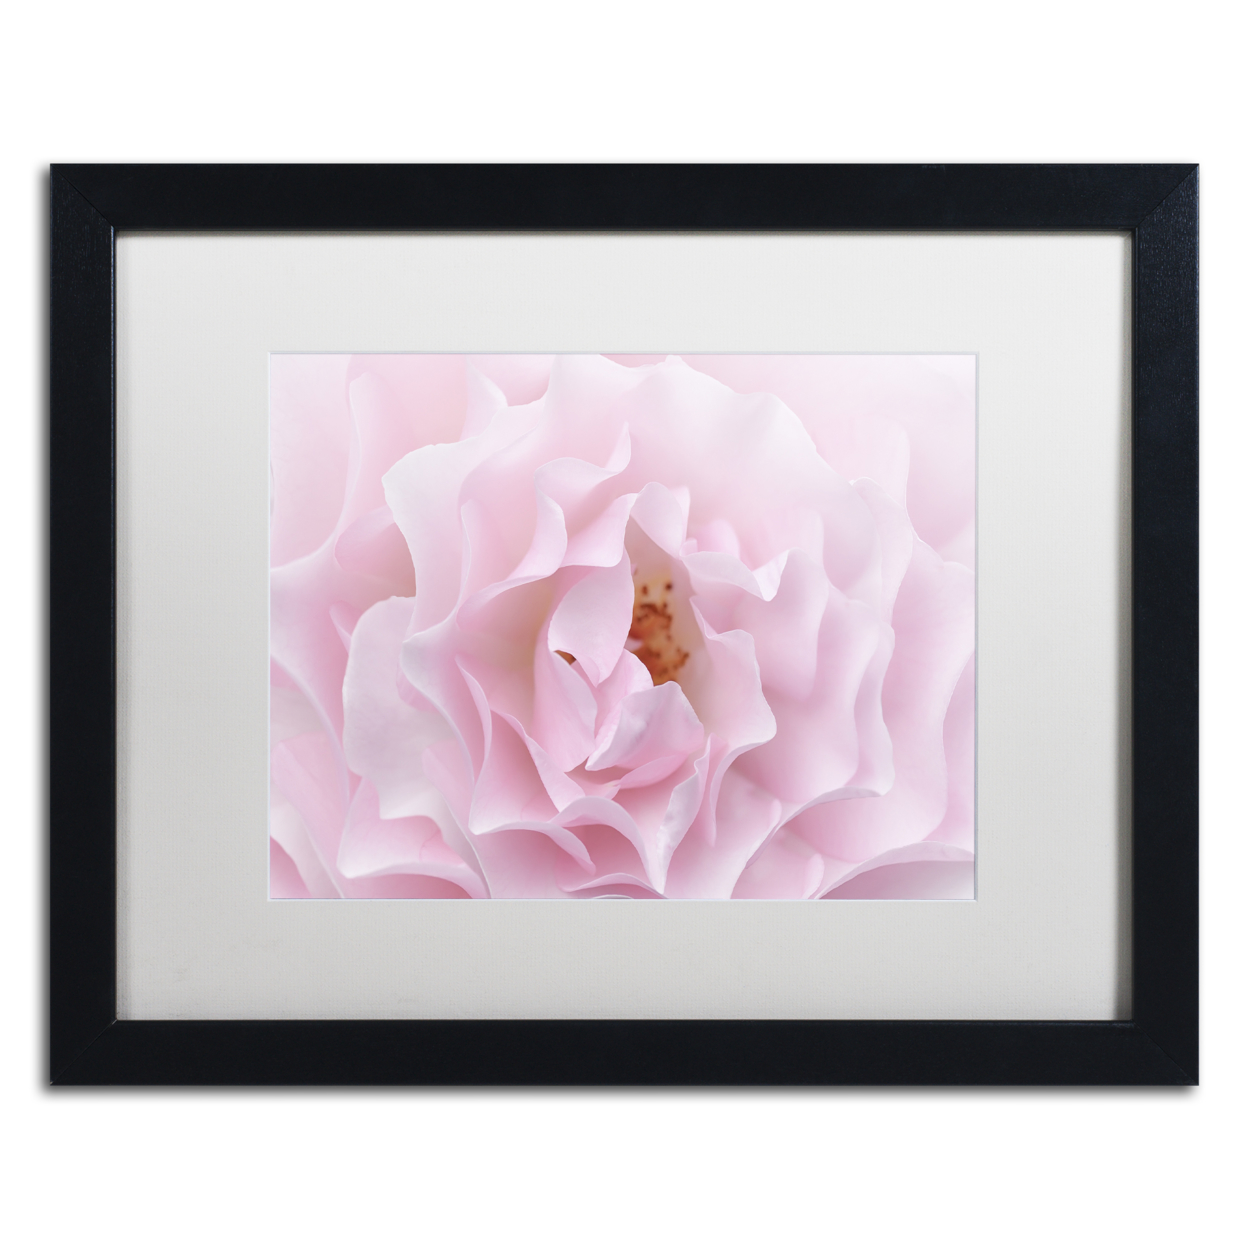 Cora Niele 'Rose Pink Rose' Black Wooden Framed Art 18 X 22 Inches